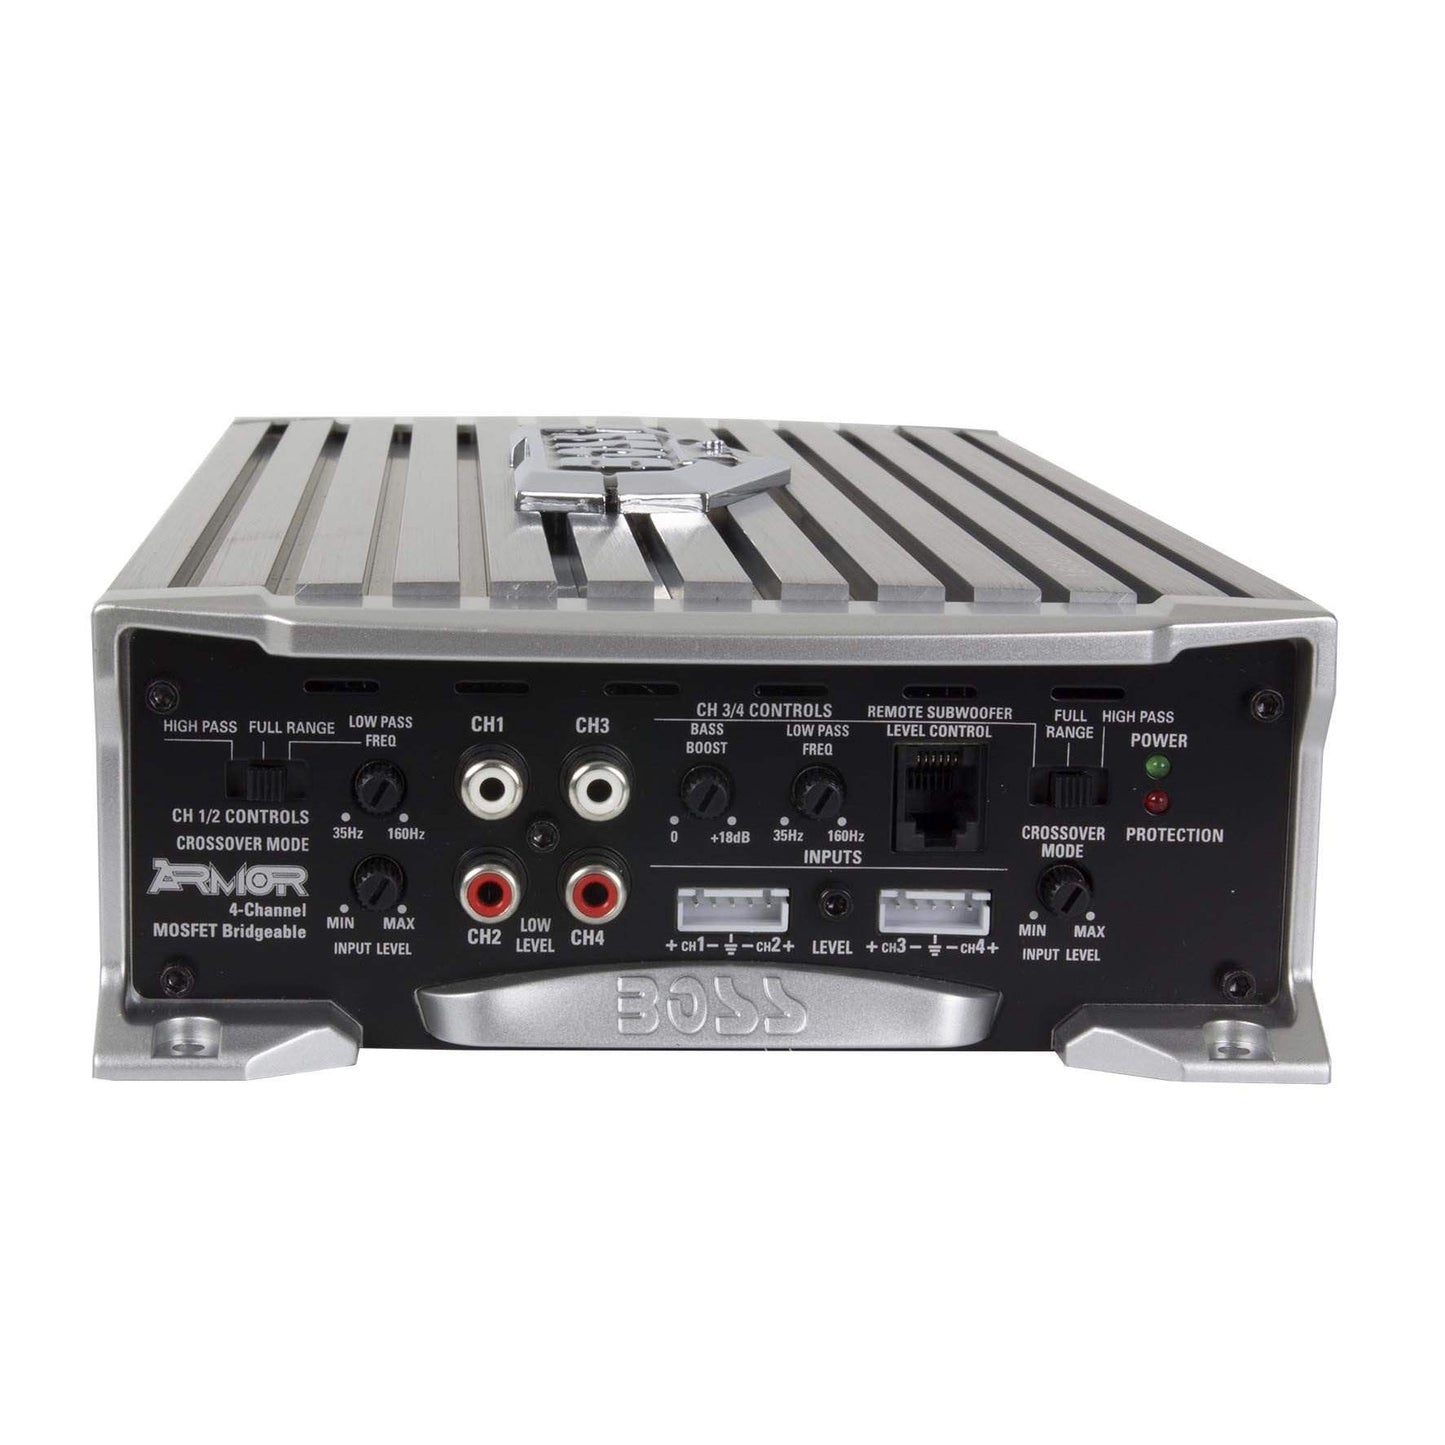 Boss Audio 1600 Watt 4 Channel Car Amplifier Power Audio with Remote | AR1600.4